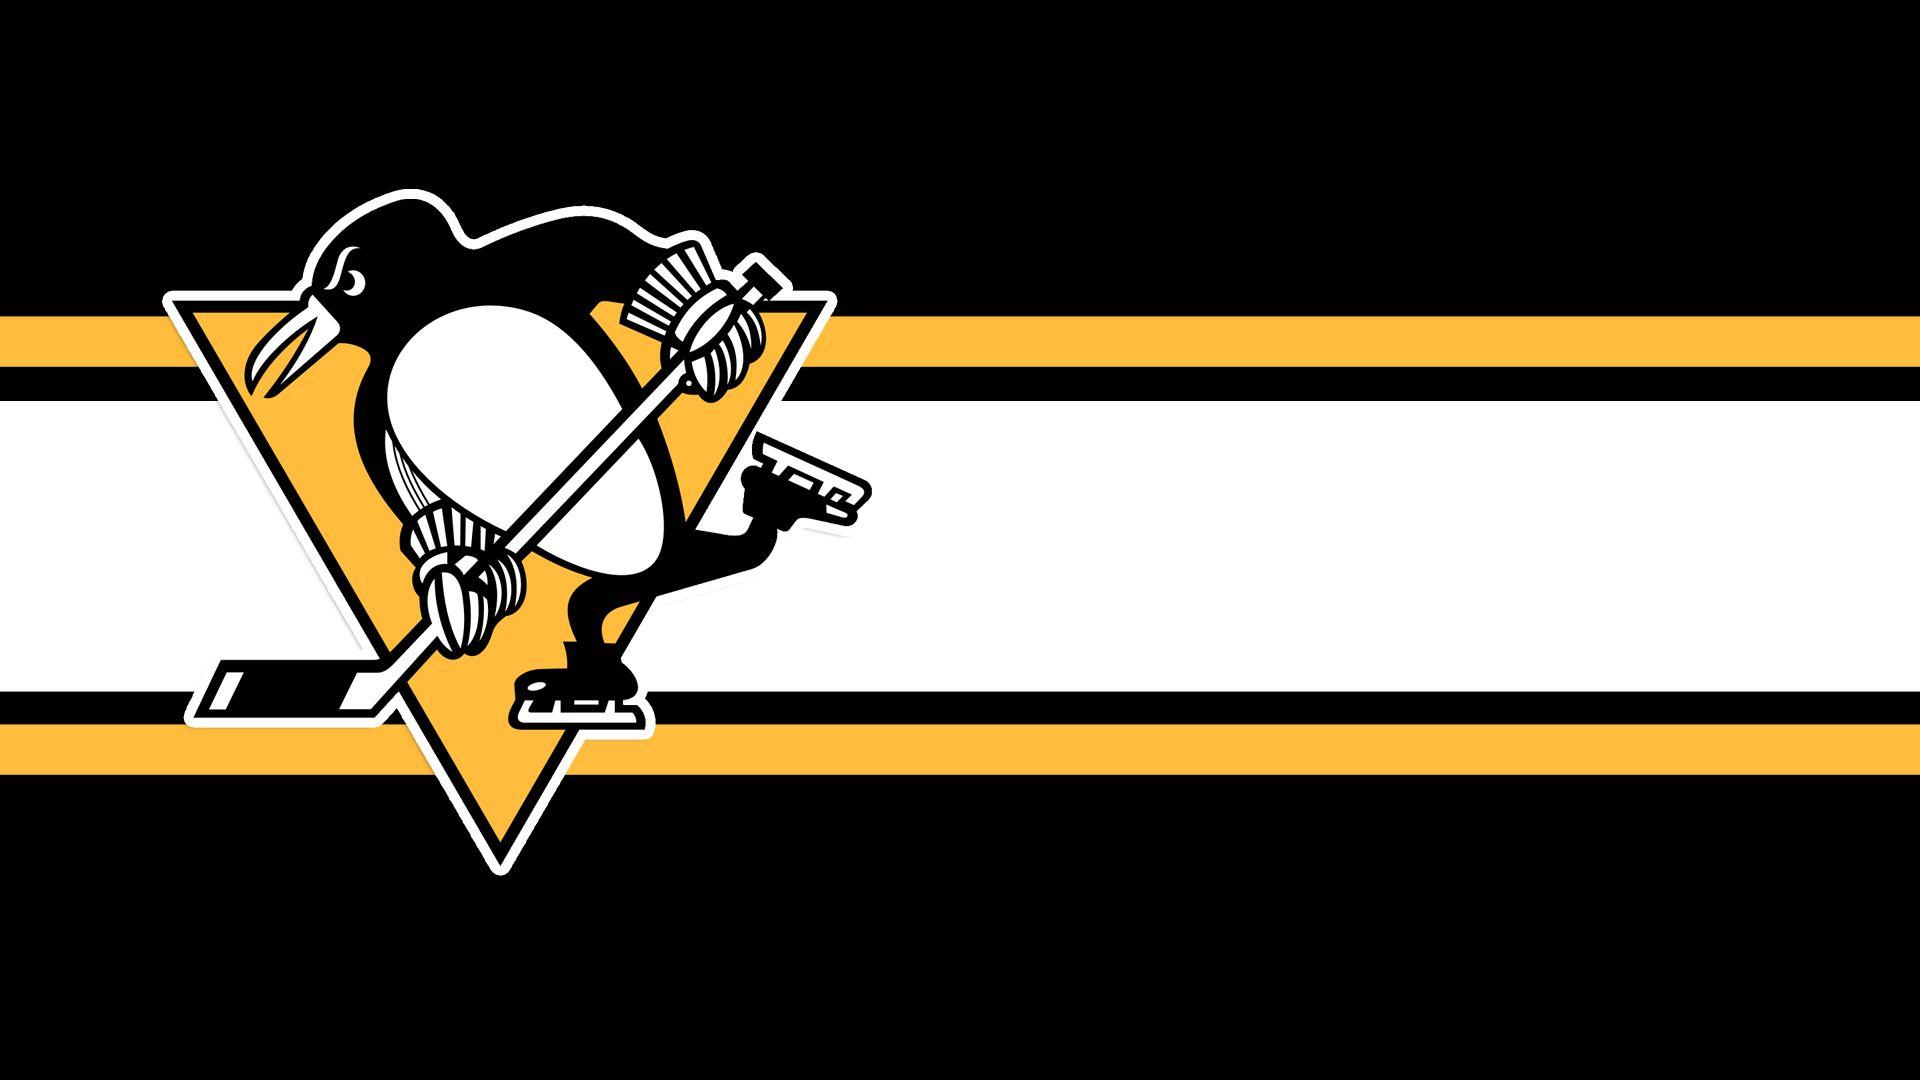 Pengiuns Logo - Images Pittsburgh Penguins Logo Wallpapers. | House ideas ...